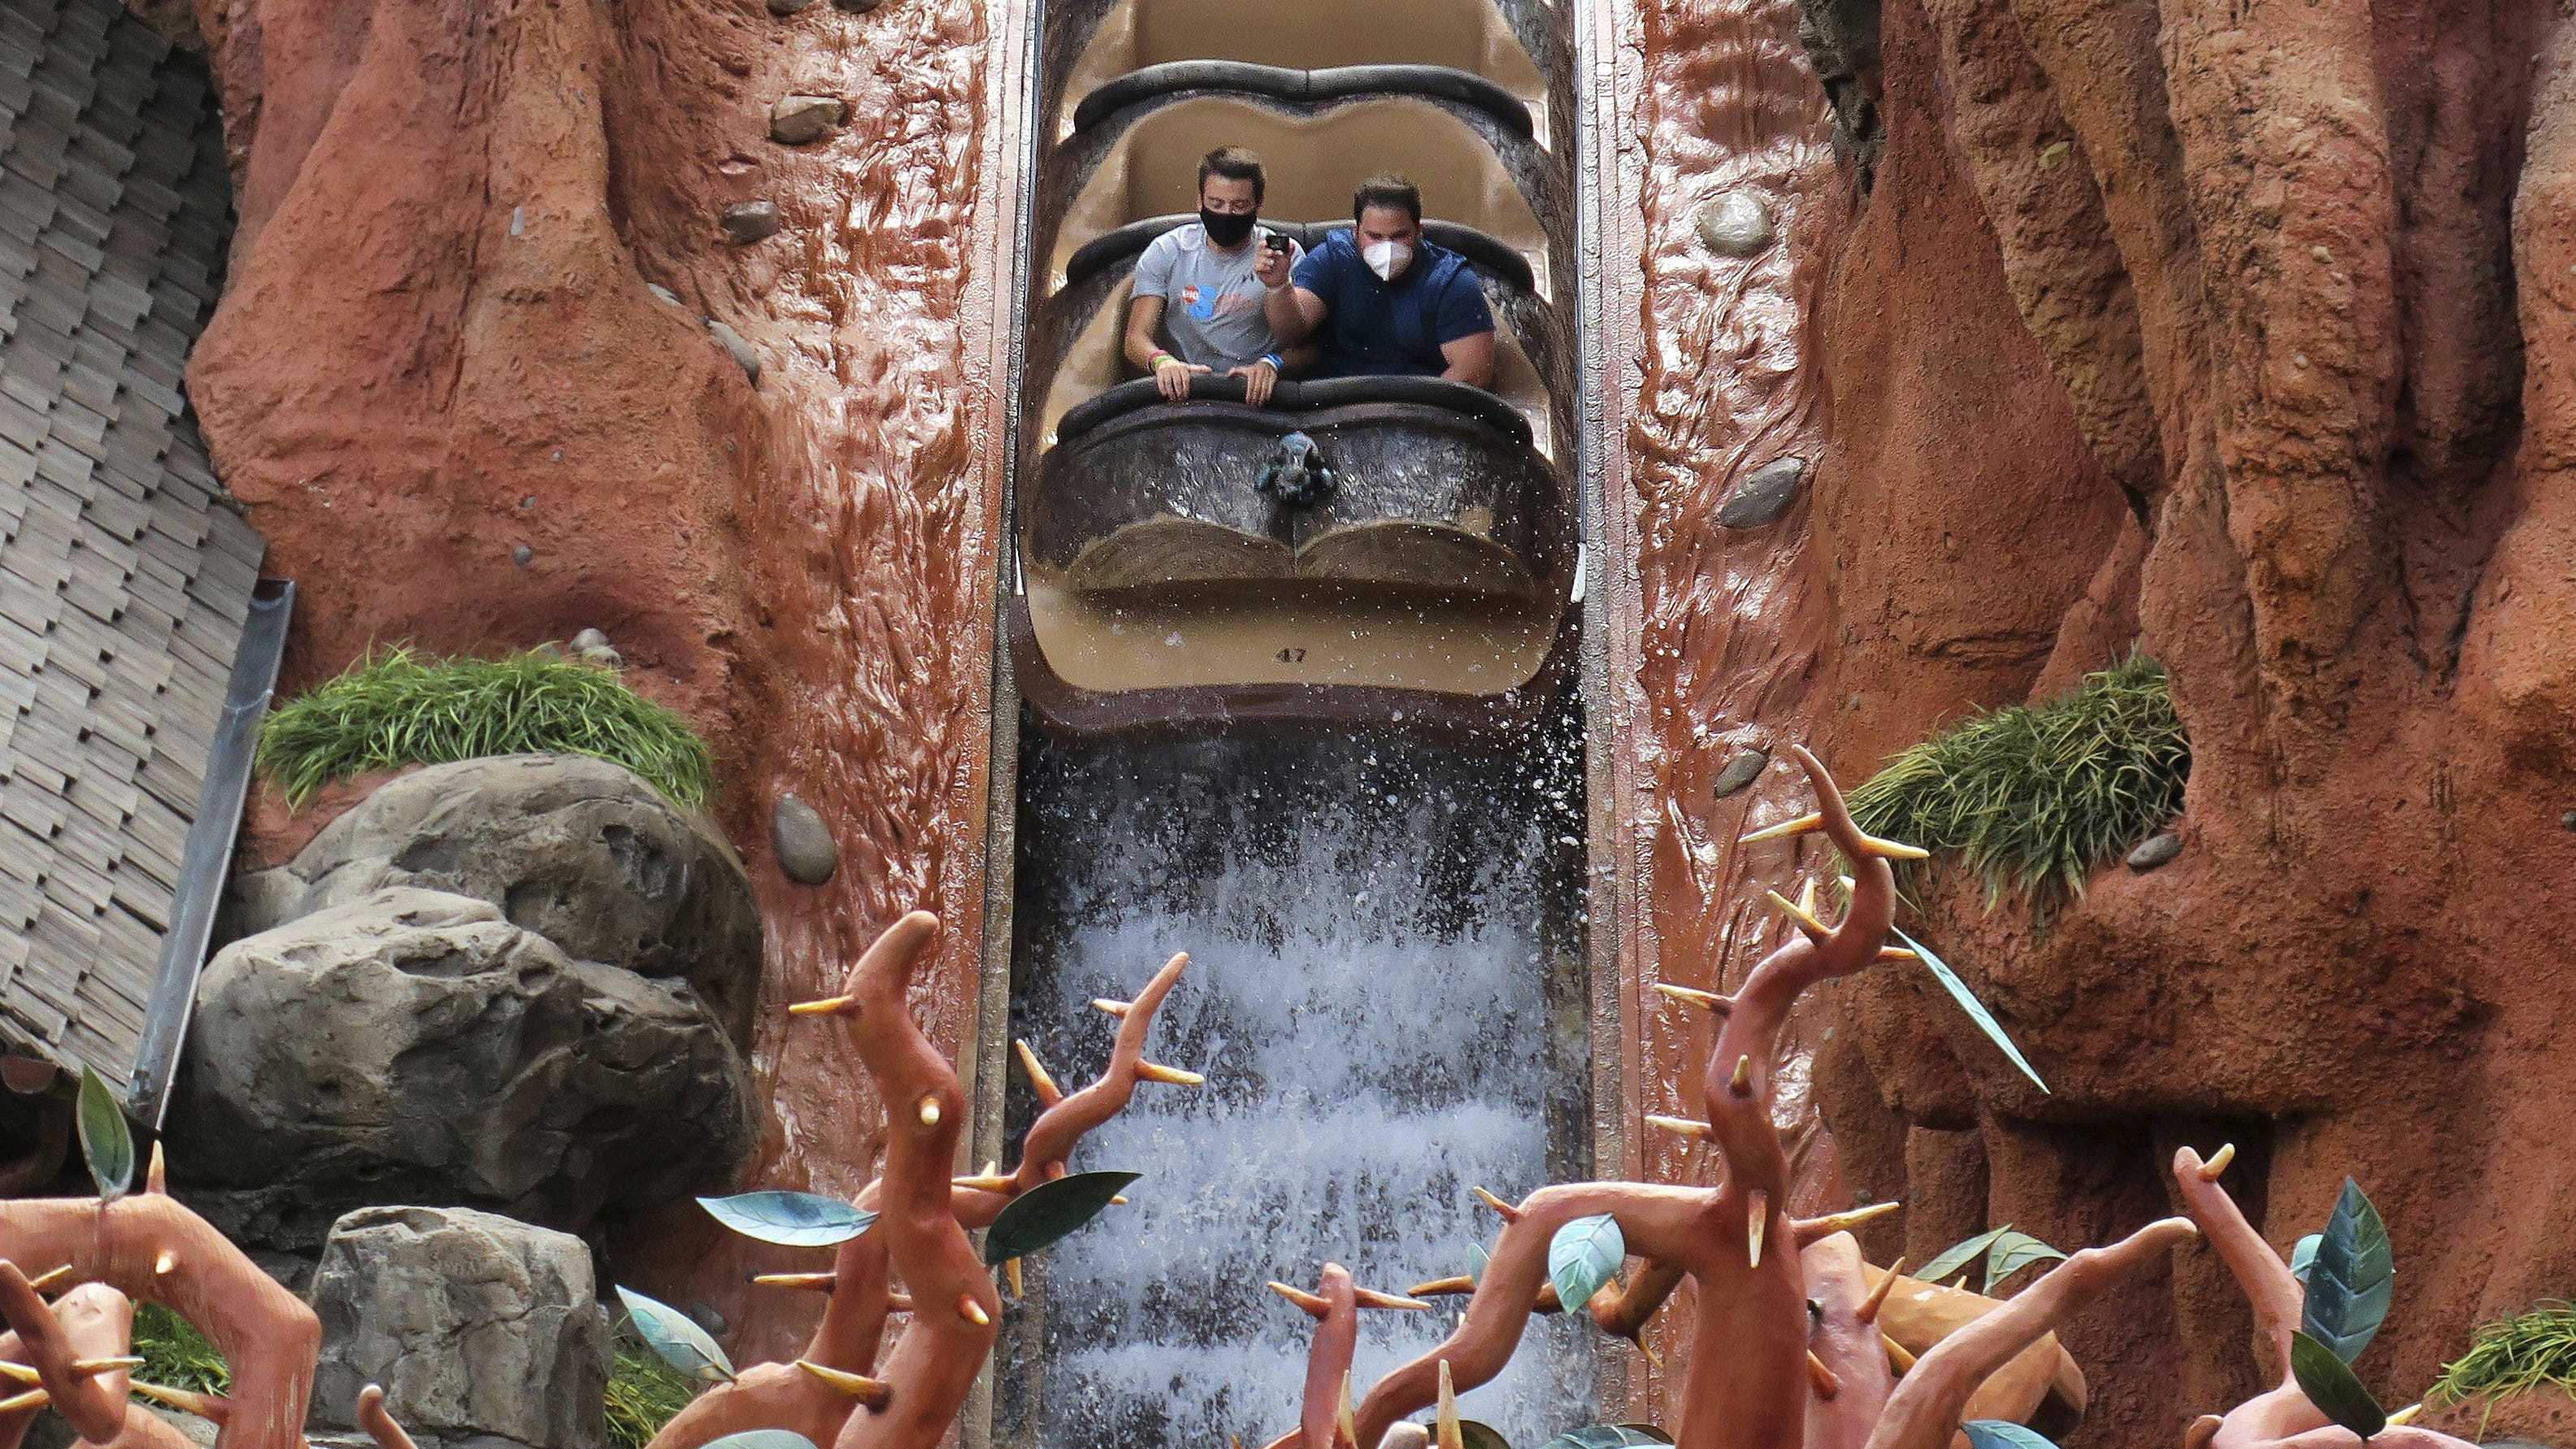 Splash Mountain log flume ride sinks at Disney World's Magic Kingdom - USA TODAY